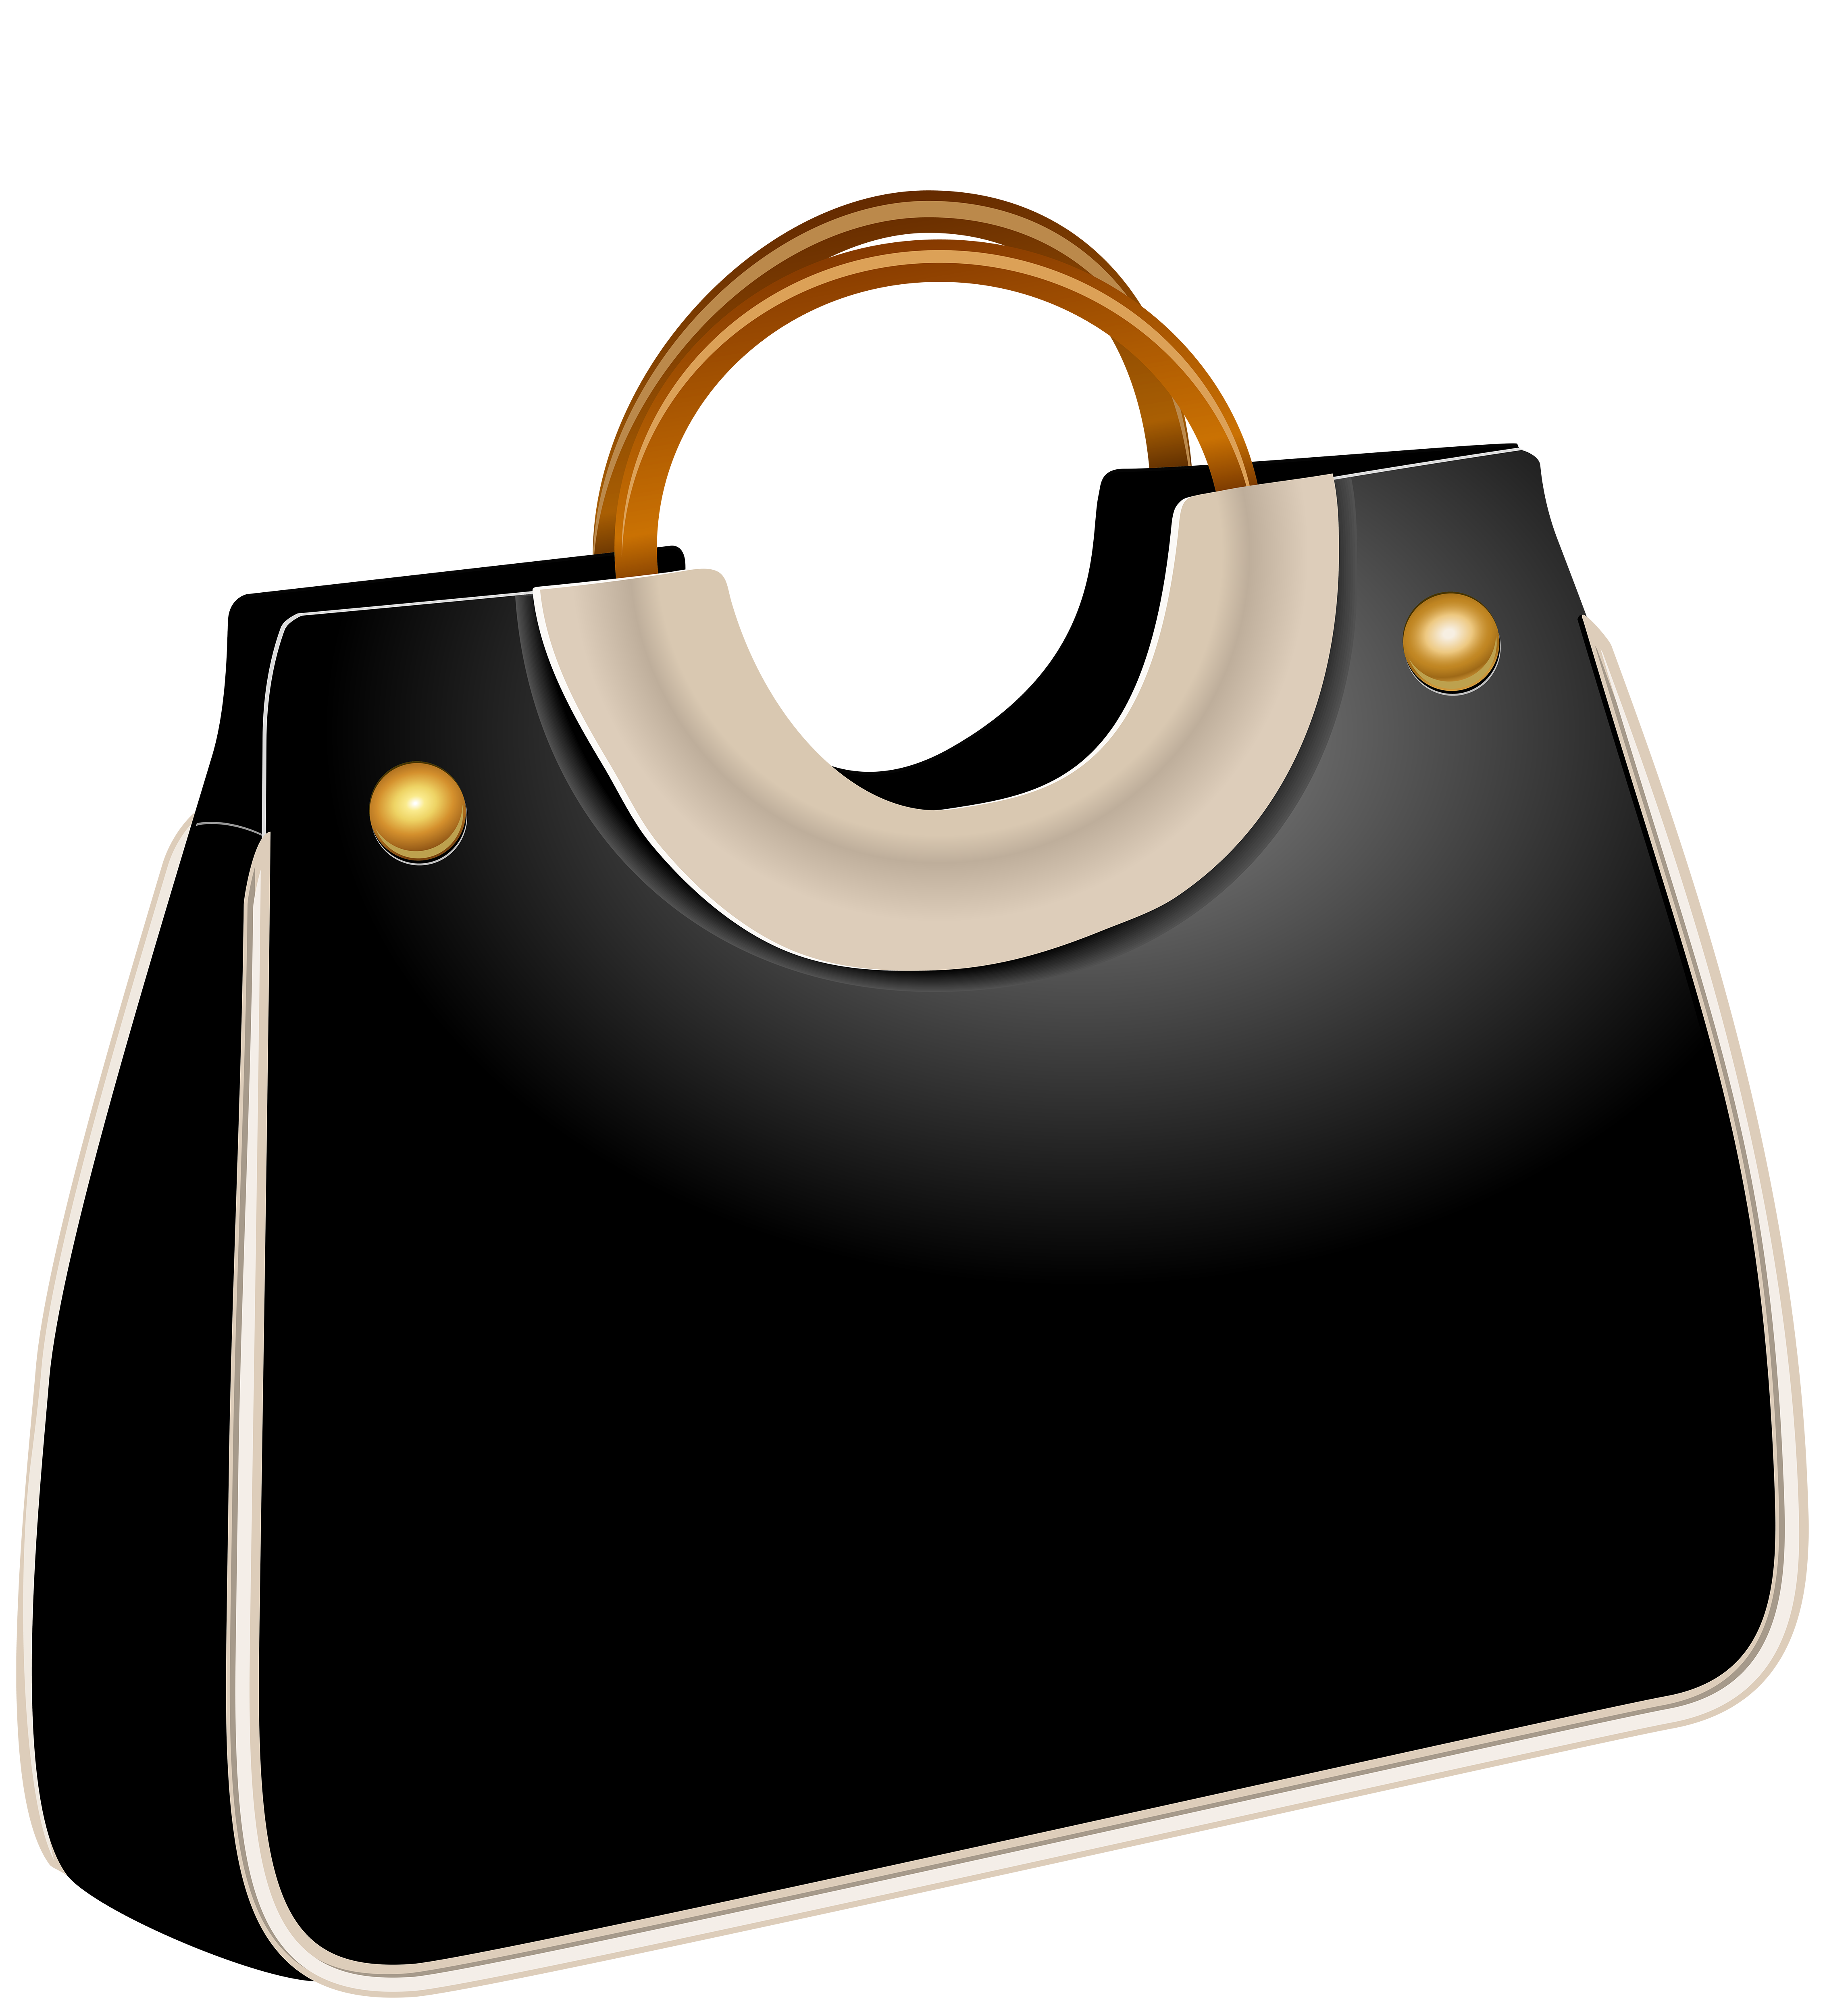 Black Bag PNG Transparent Background, Free Download #33943 - FreeIconsPNG